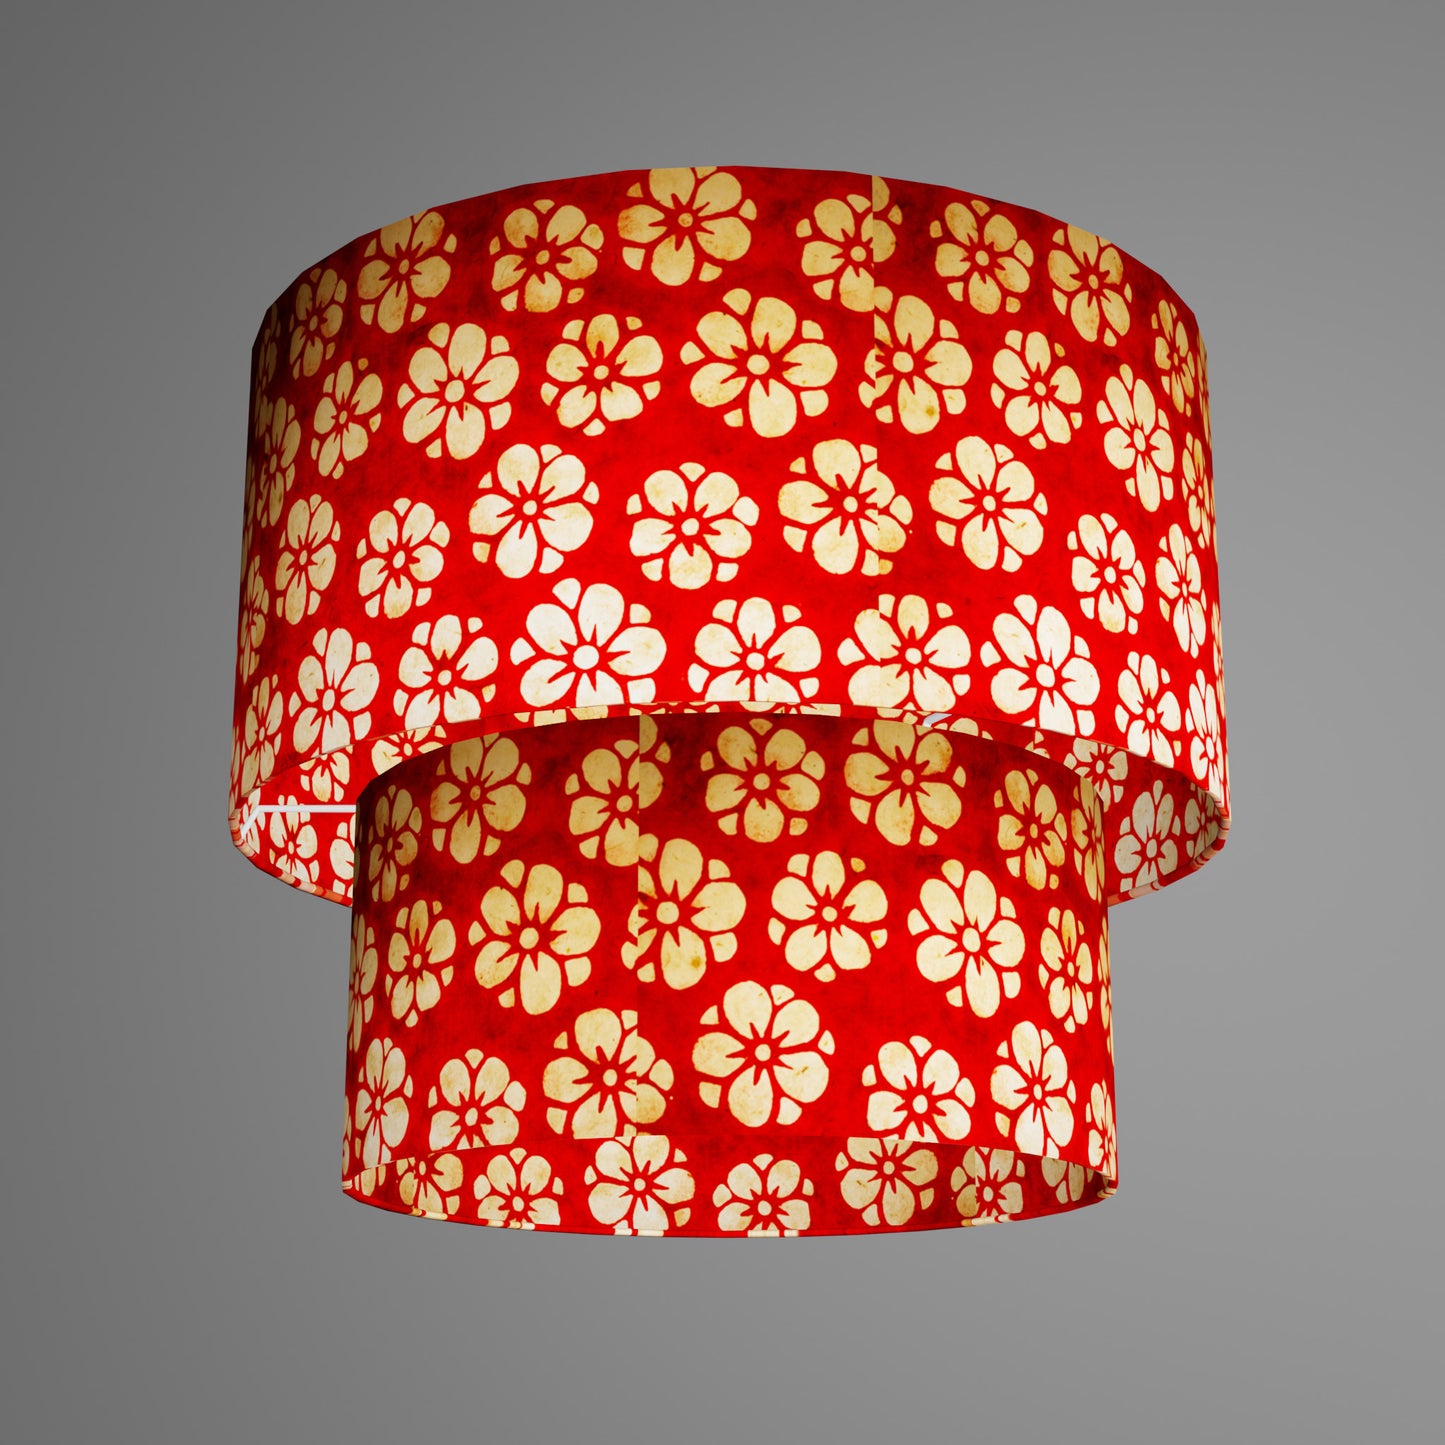 2 Tier Lamp Shade - P76 - Batik Star Flower Red, 40cm x 20cm & 30cm x 15cm